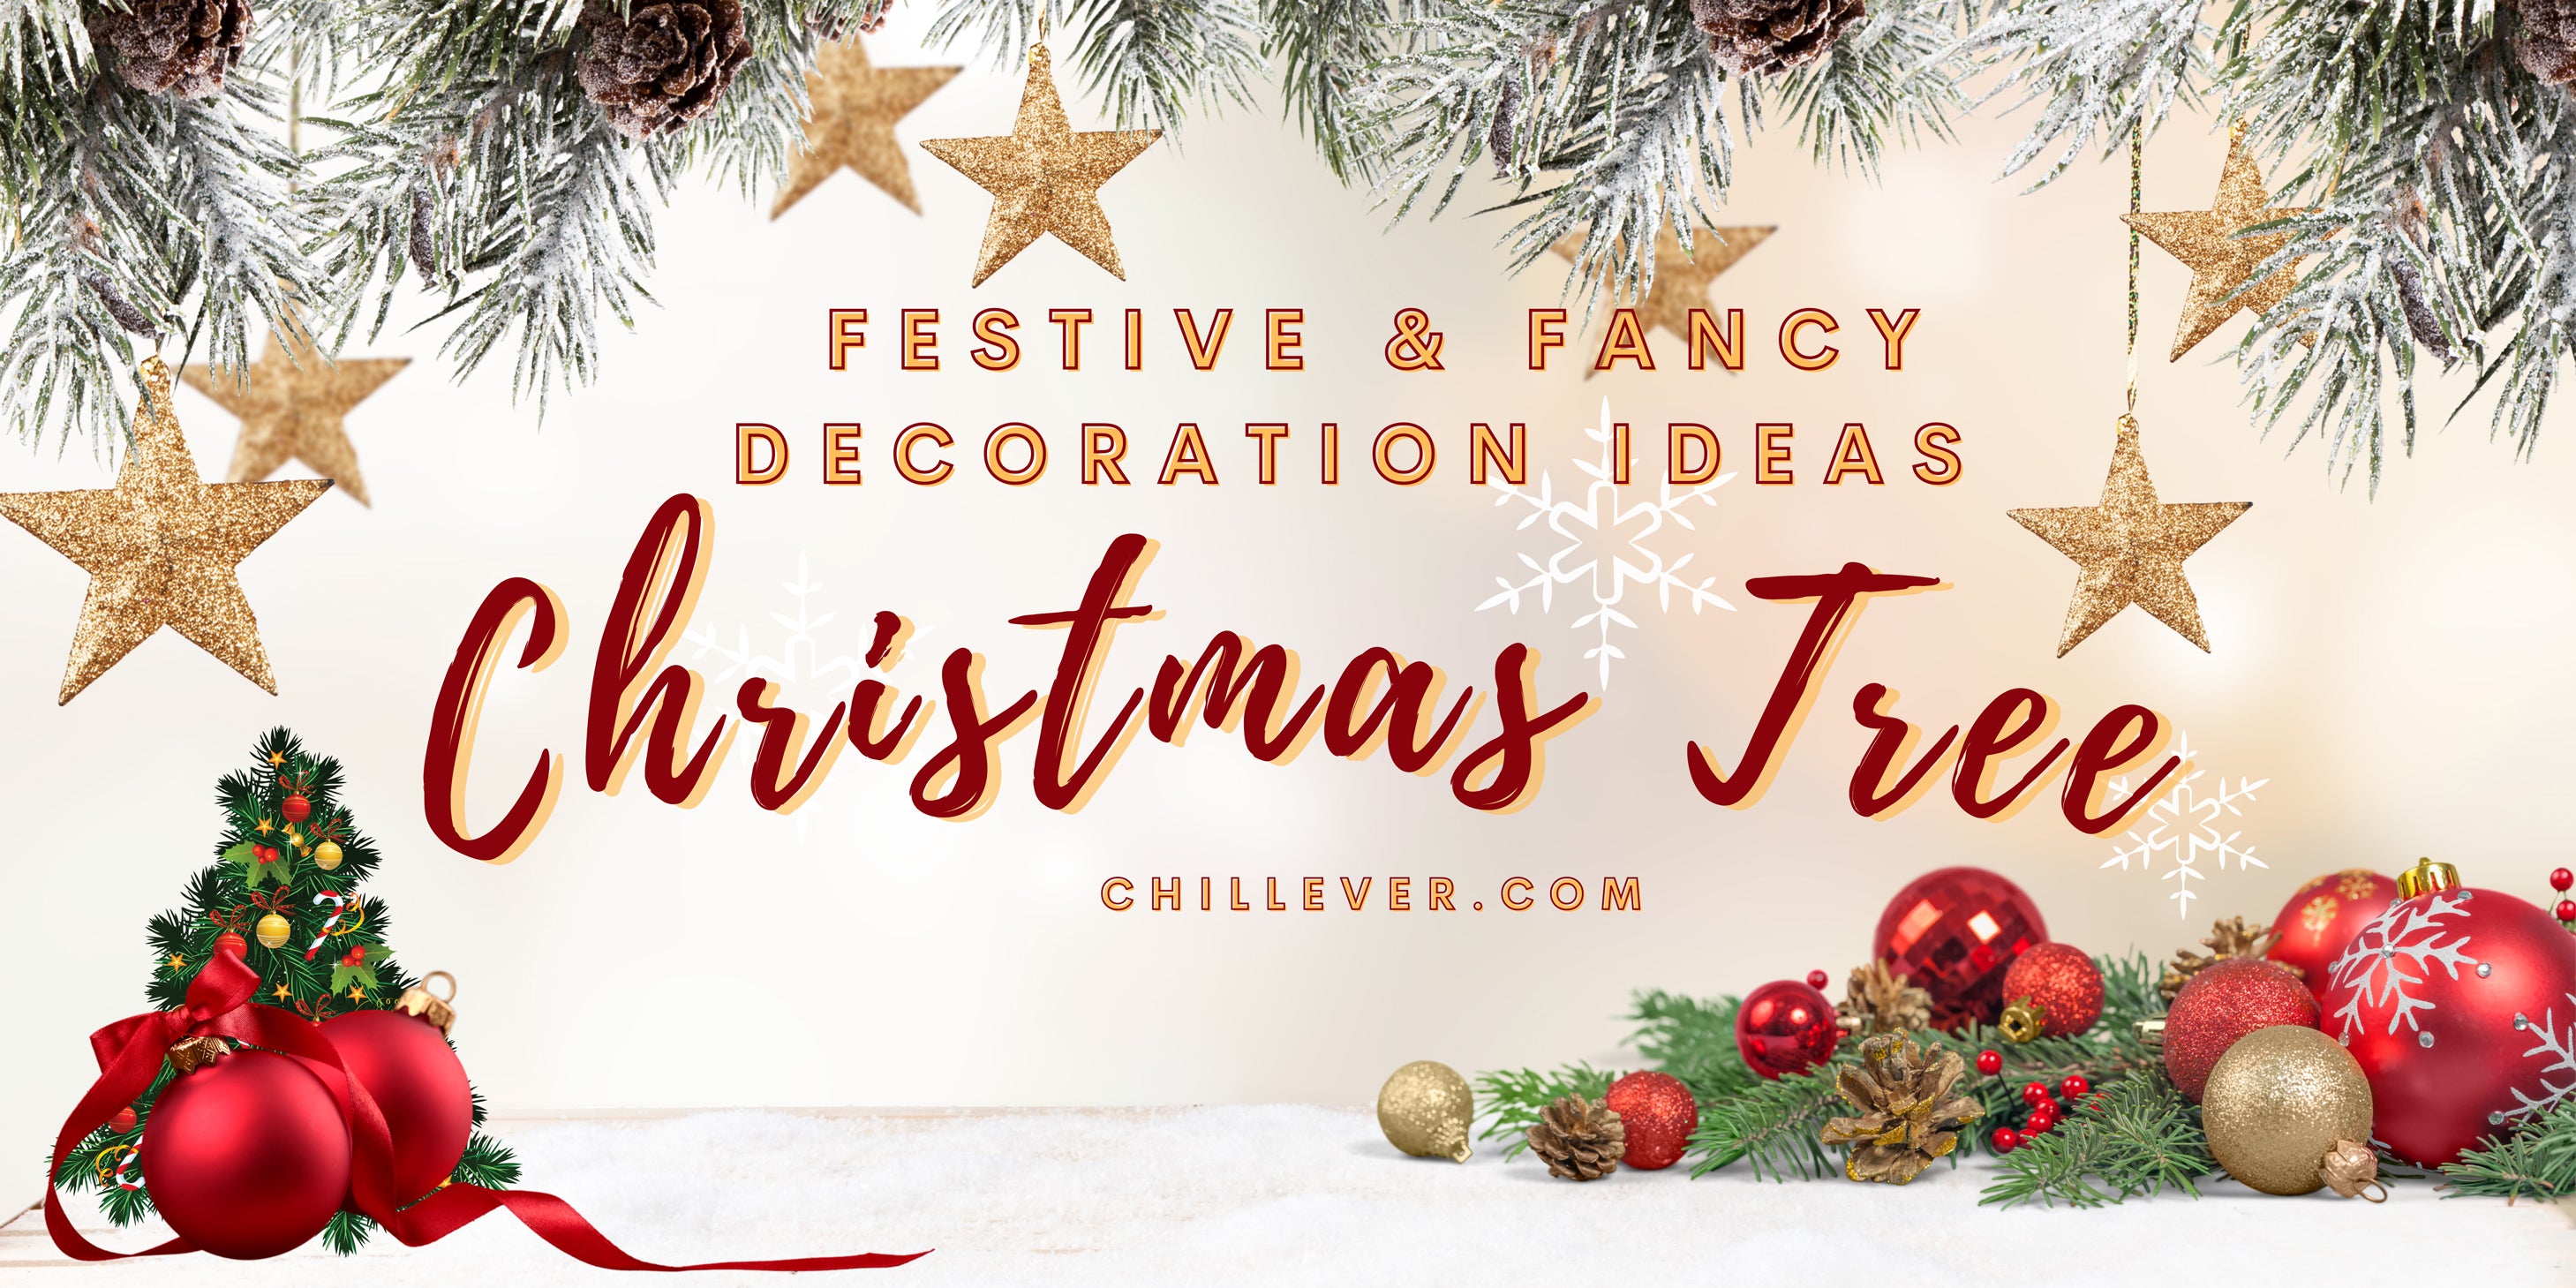 Christmas Tree Decorations: Festive & Fancy Ideas to Celebrate A Merry Christmas